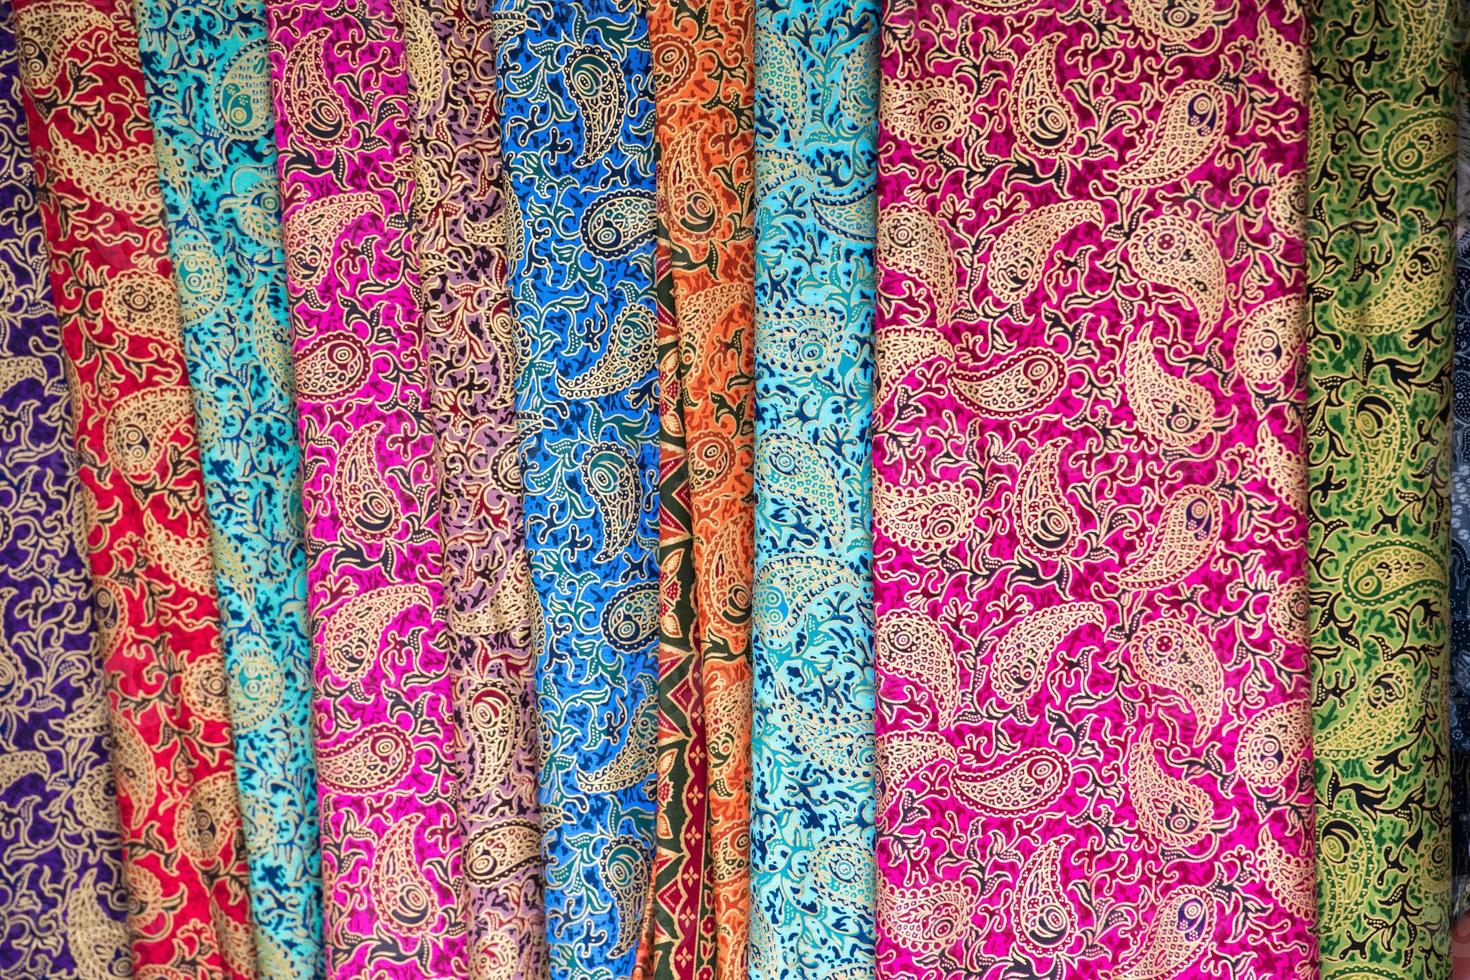 Tela de algodón de seda batik de Indonesia a la venta foto